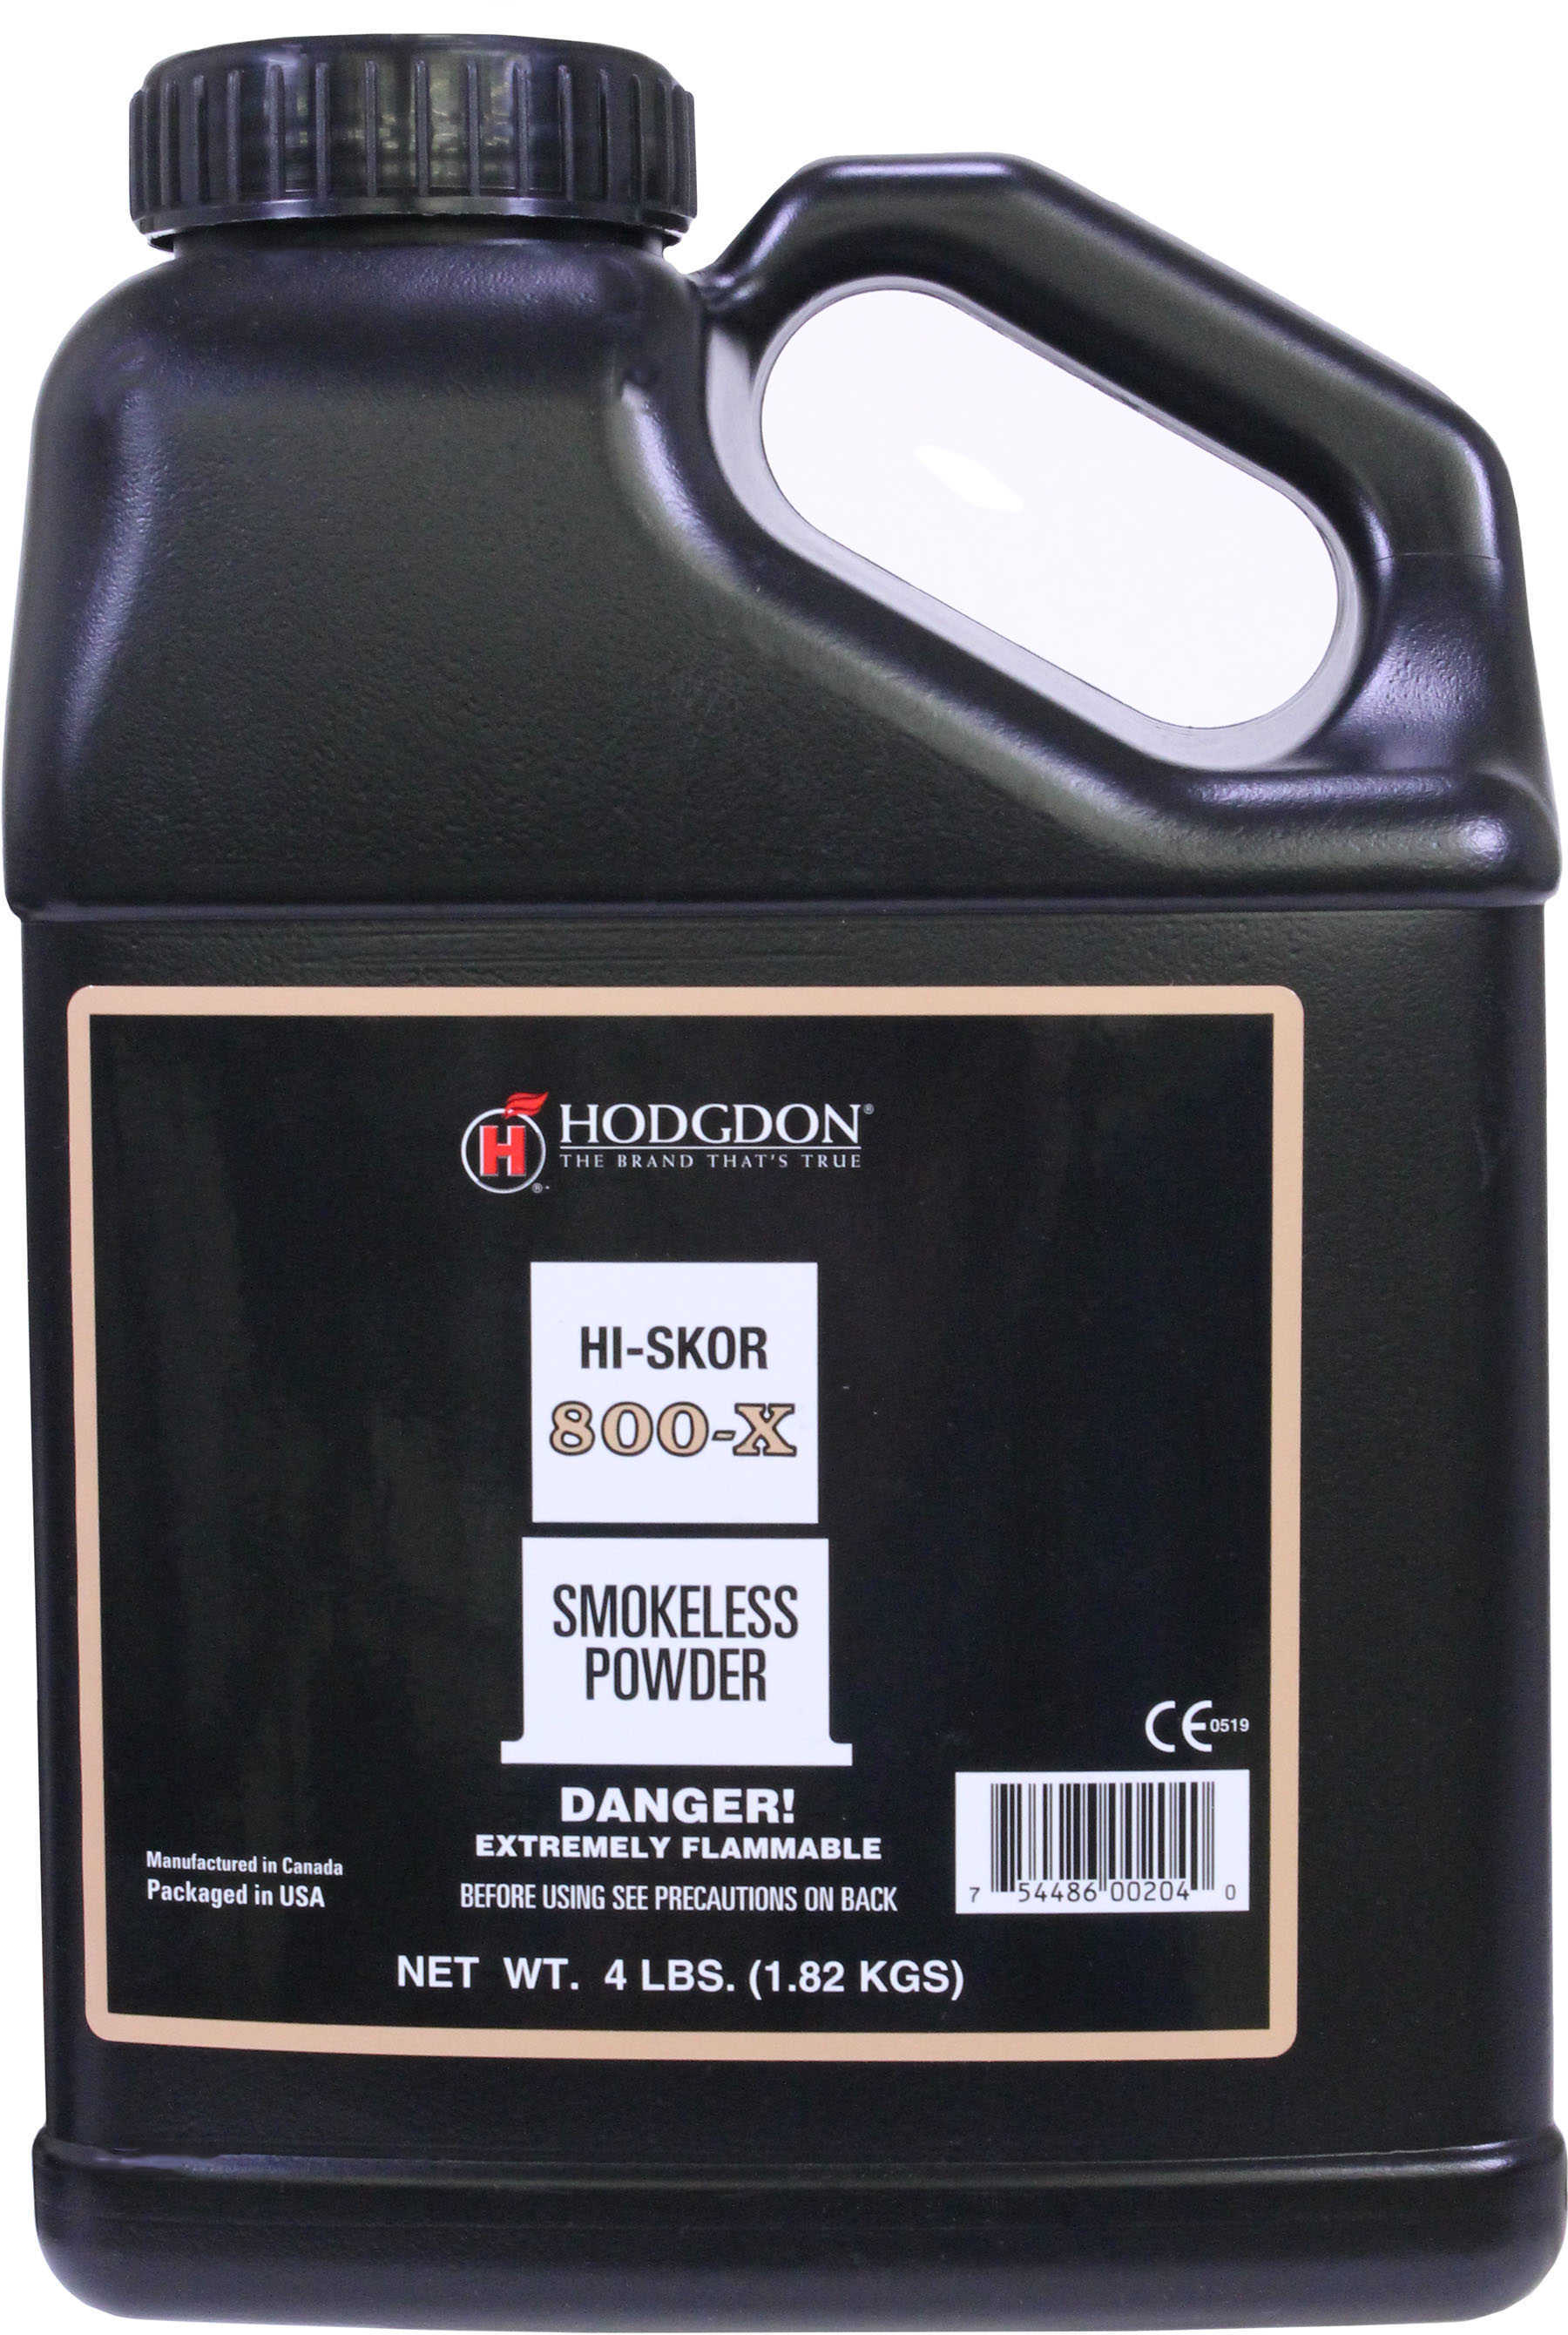 Hodgdon 800-X Powder 4Lb